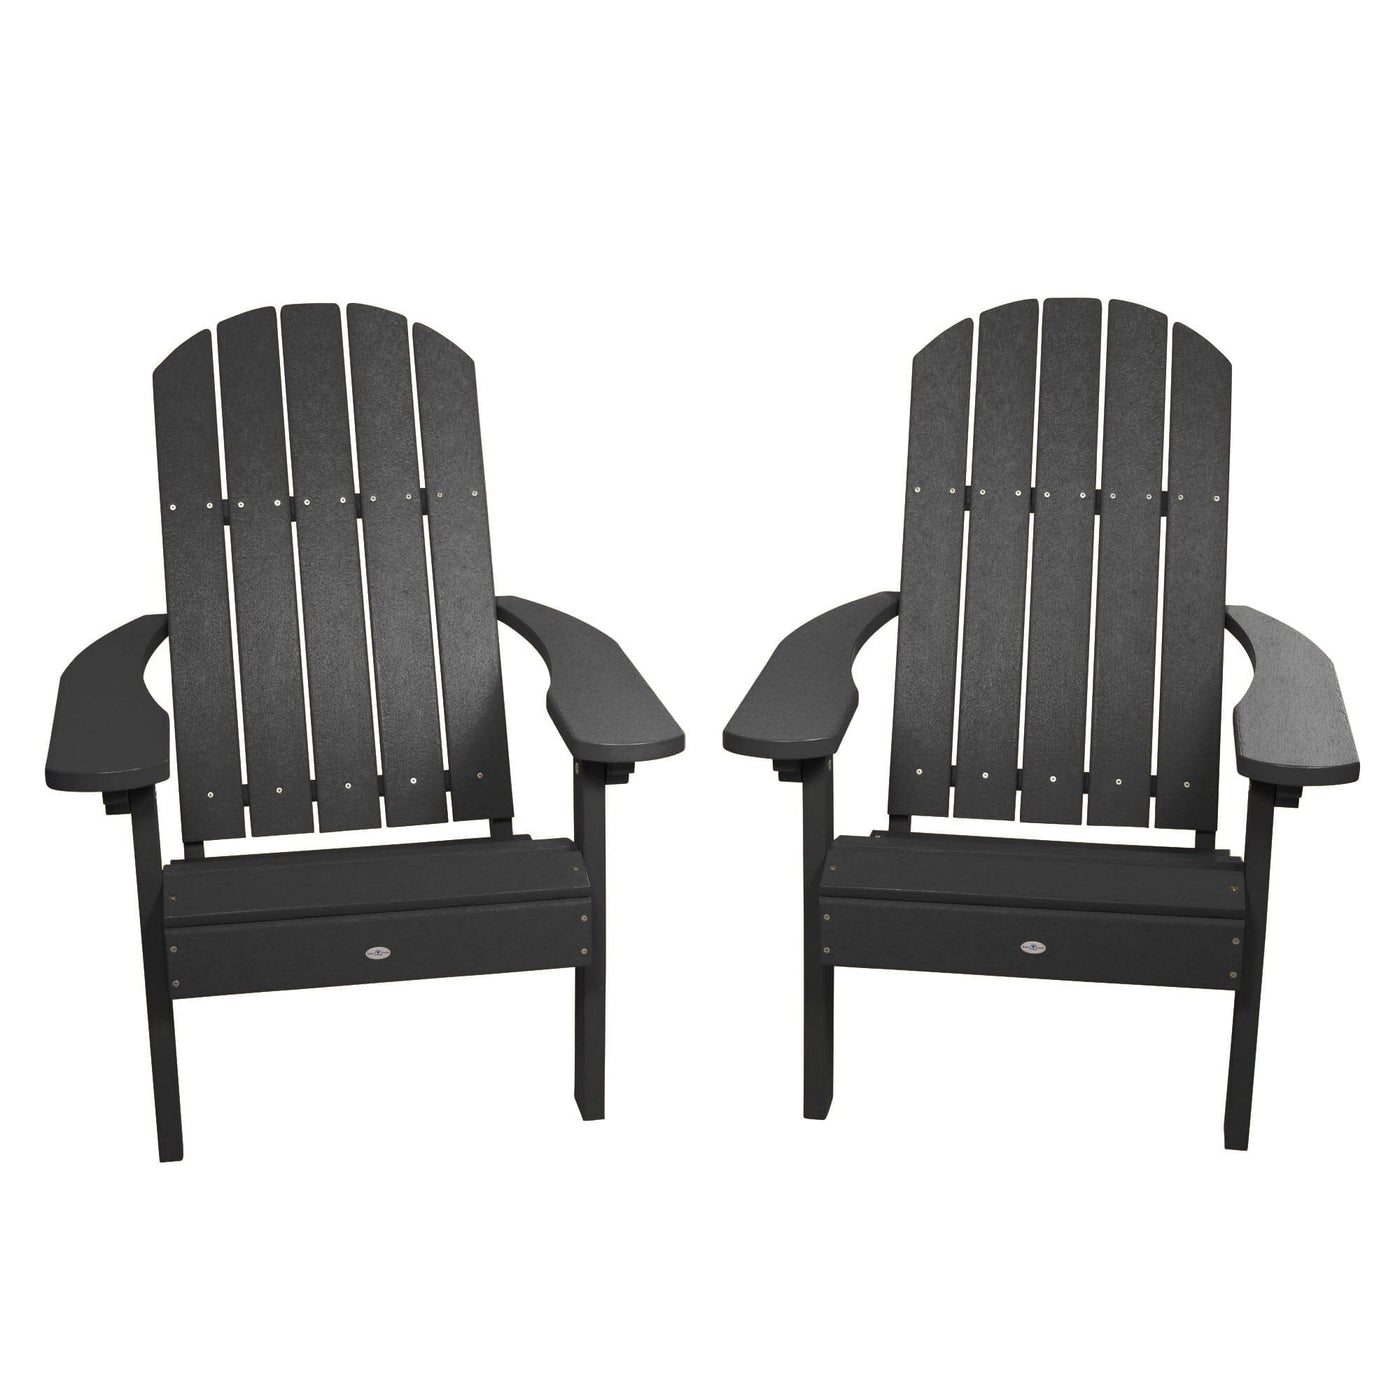 Cape Classic Adirondack Chair (Set of 2) Kitted Set Bahia Verde Outdoors Black Sand 